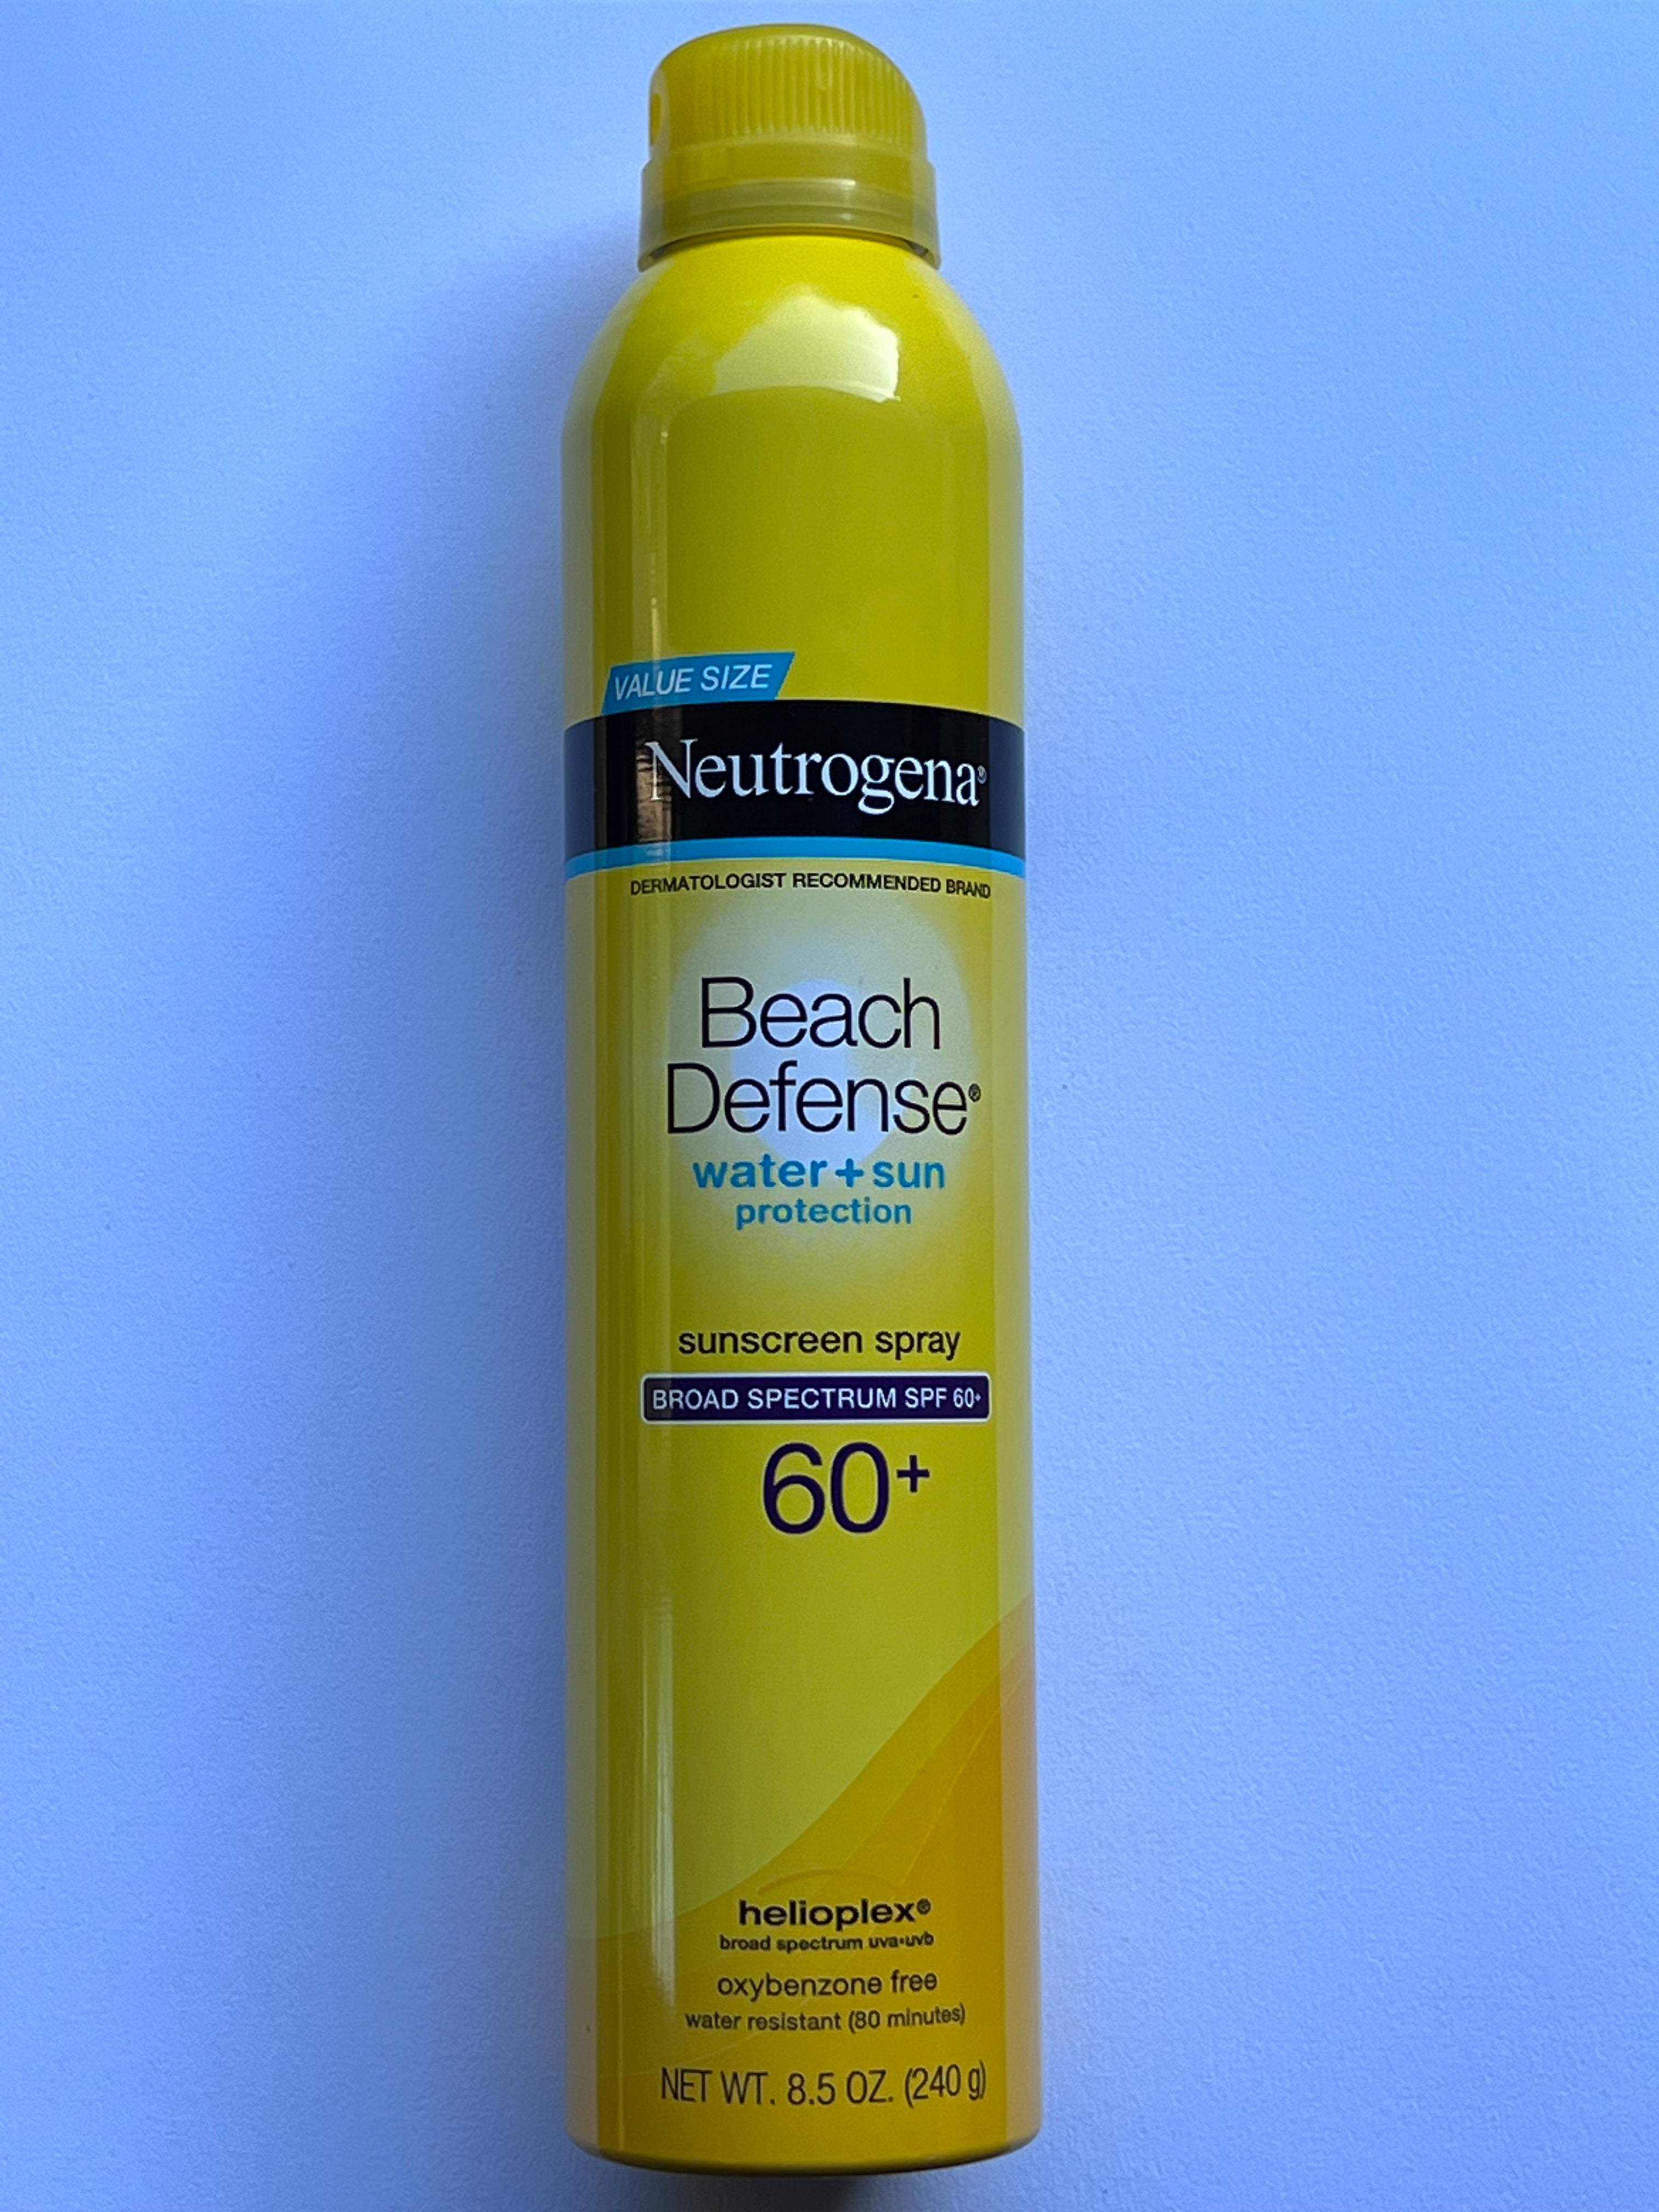 Neutrogena SPF 60 Beach Defense Sunscreen Spray UVA & UVB Broad Spectrum 80 Min Water Resistant - Supporting ORCRF.org